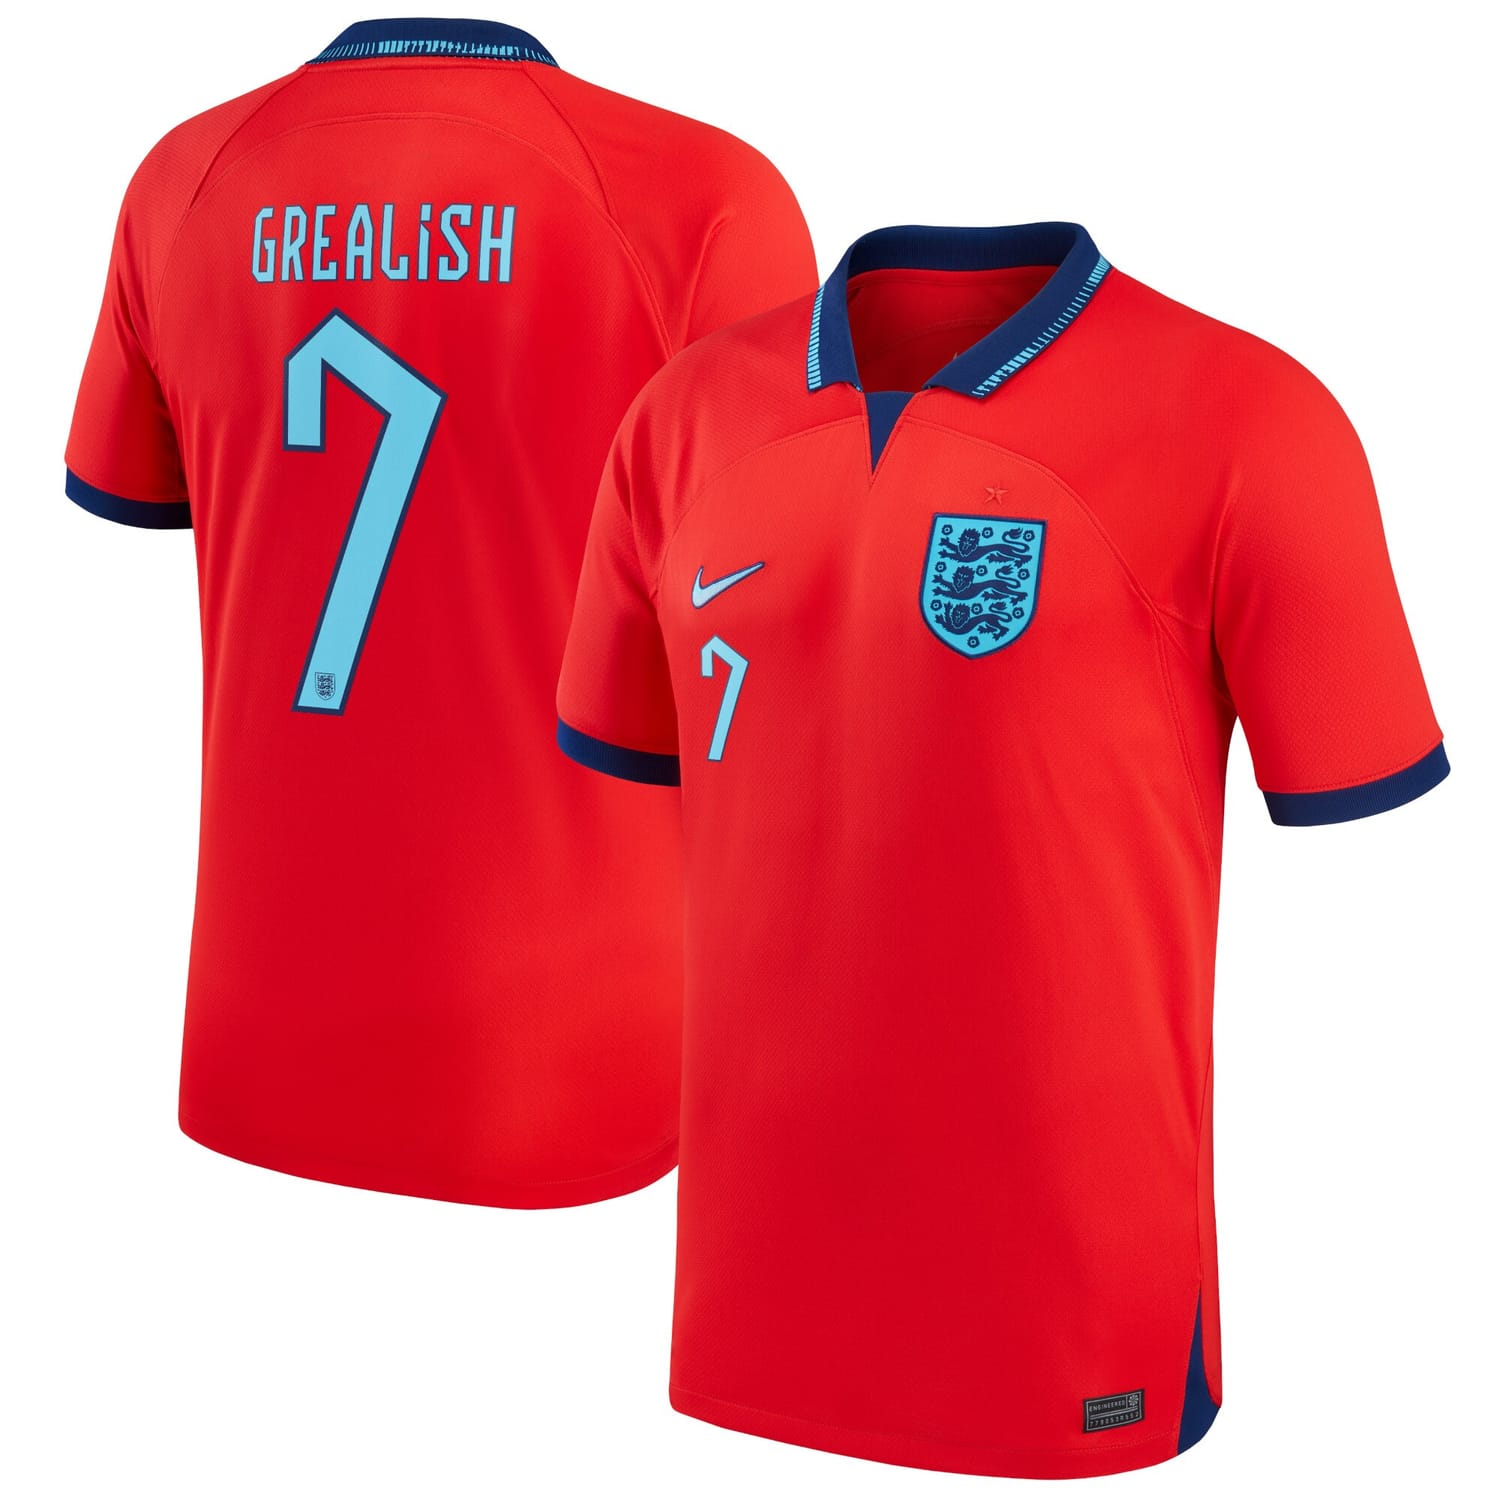 England National Team Away Jersey Shirt 2022 player Jack Grealish 7 printing for Men